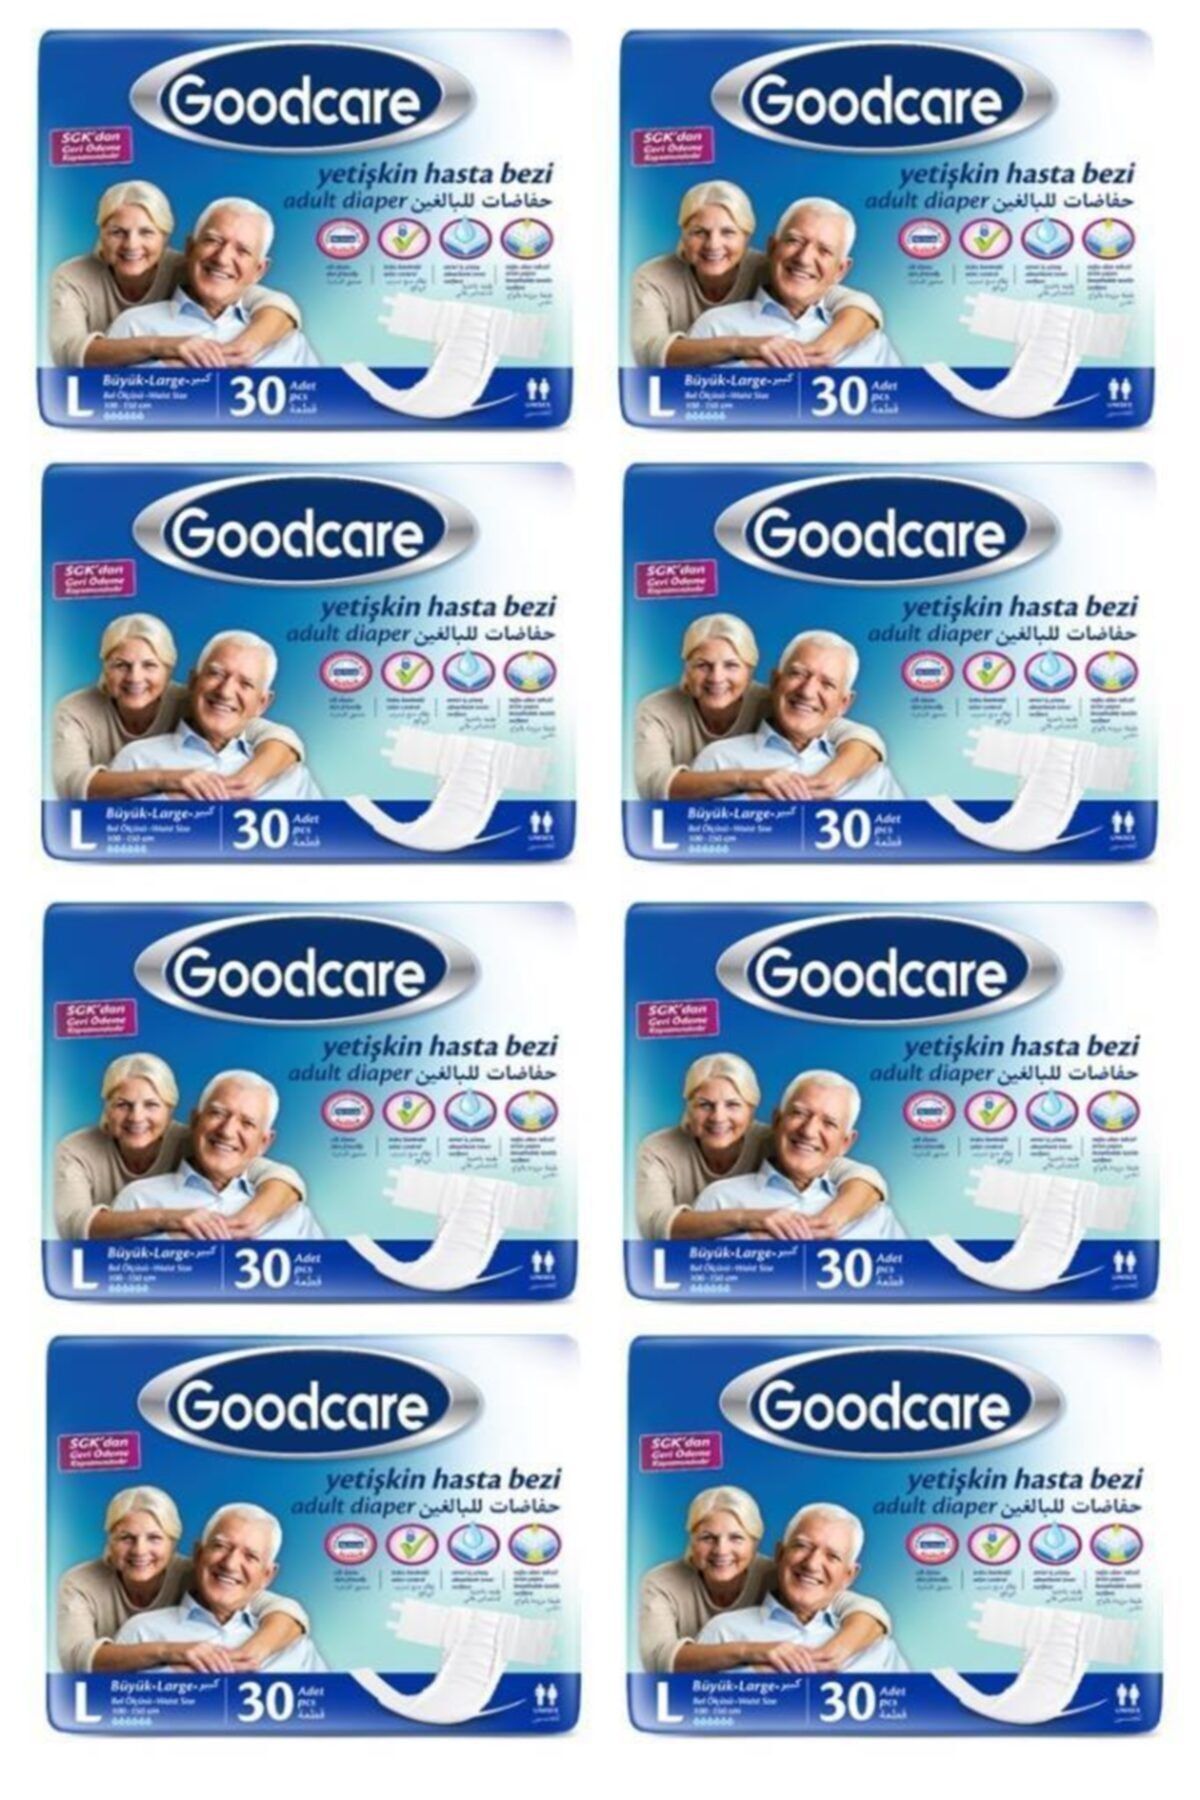 Goodcare -joly Belbantlı Hasta Bezi 240 Adet Büyük Large